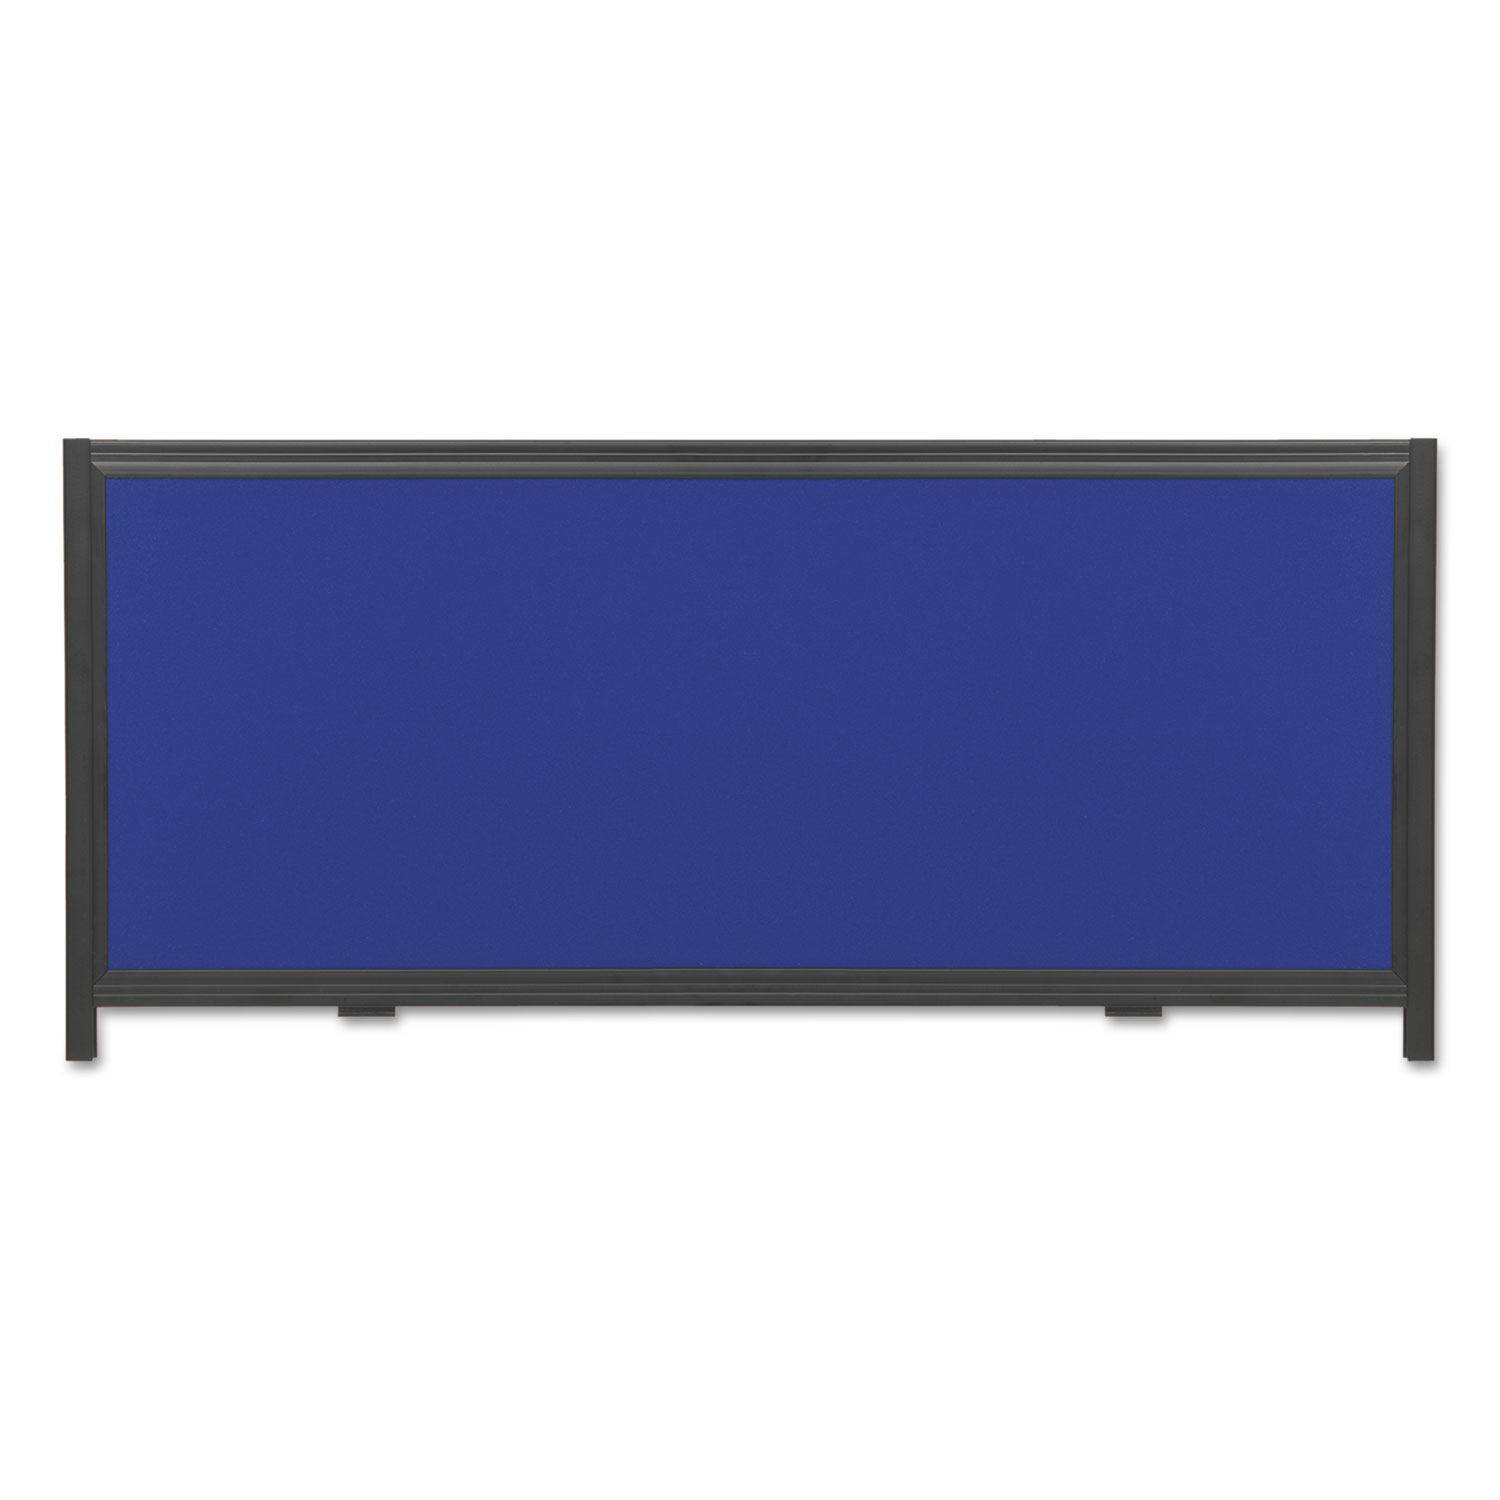  Quartet SB93501Q Display System Optional Header Panel, Fabric, 24 x 10, Blue/Gray/Black PVC Frame (QRTSB93501Q) 